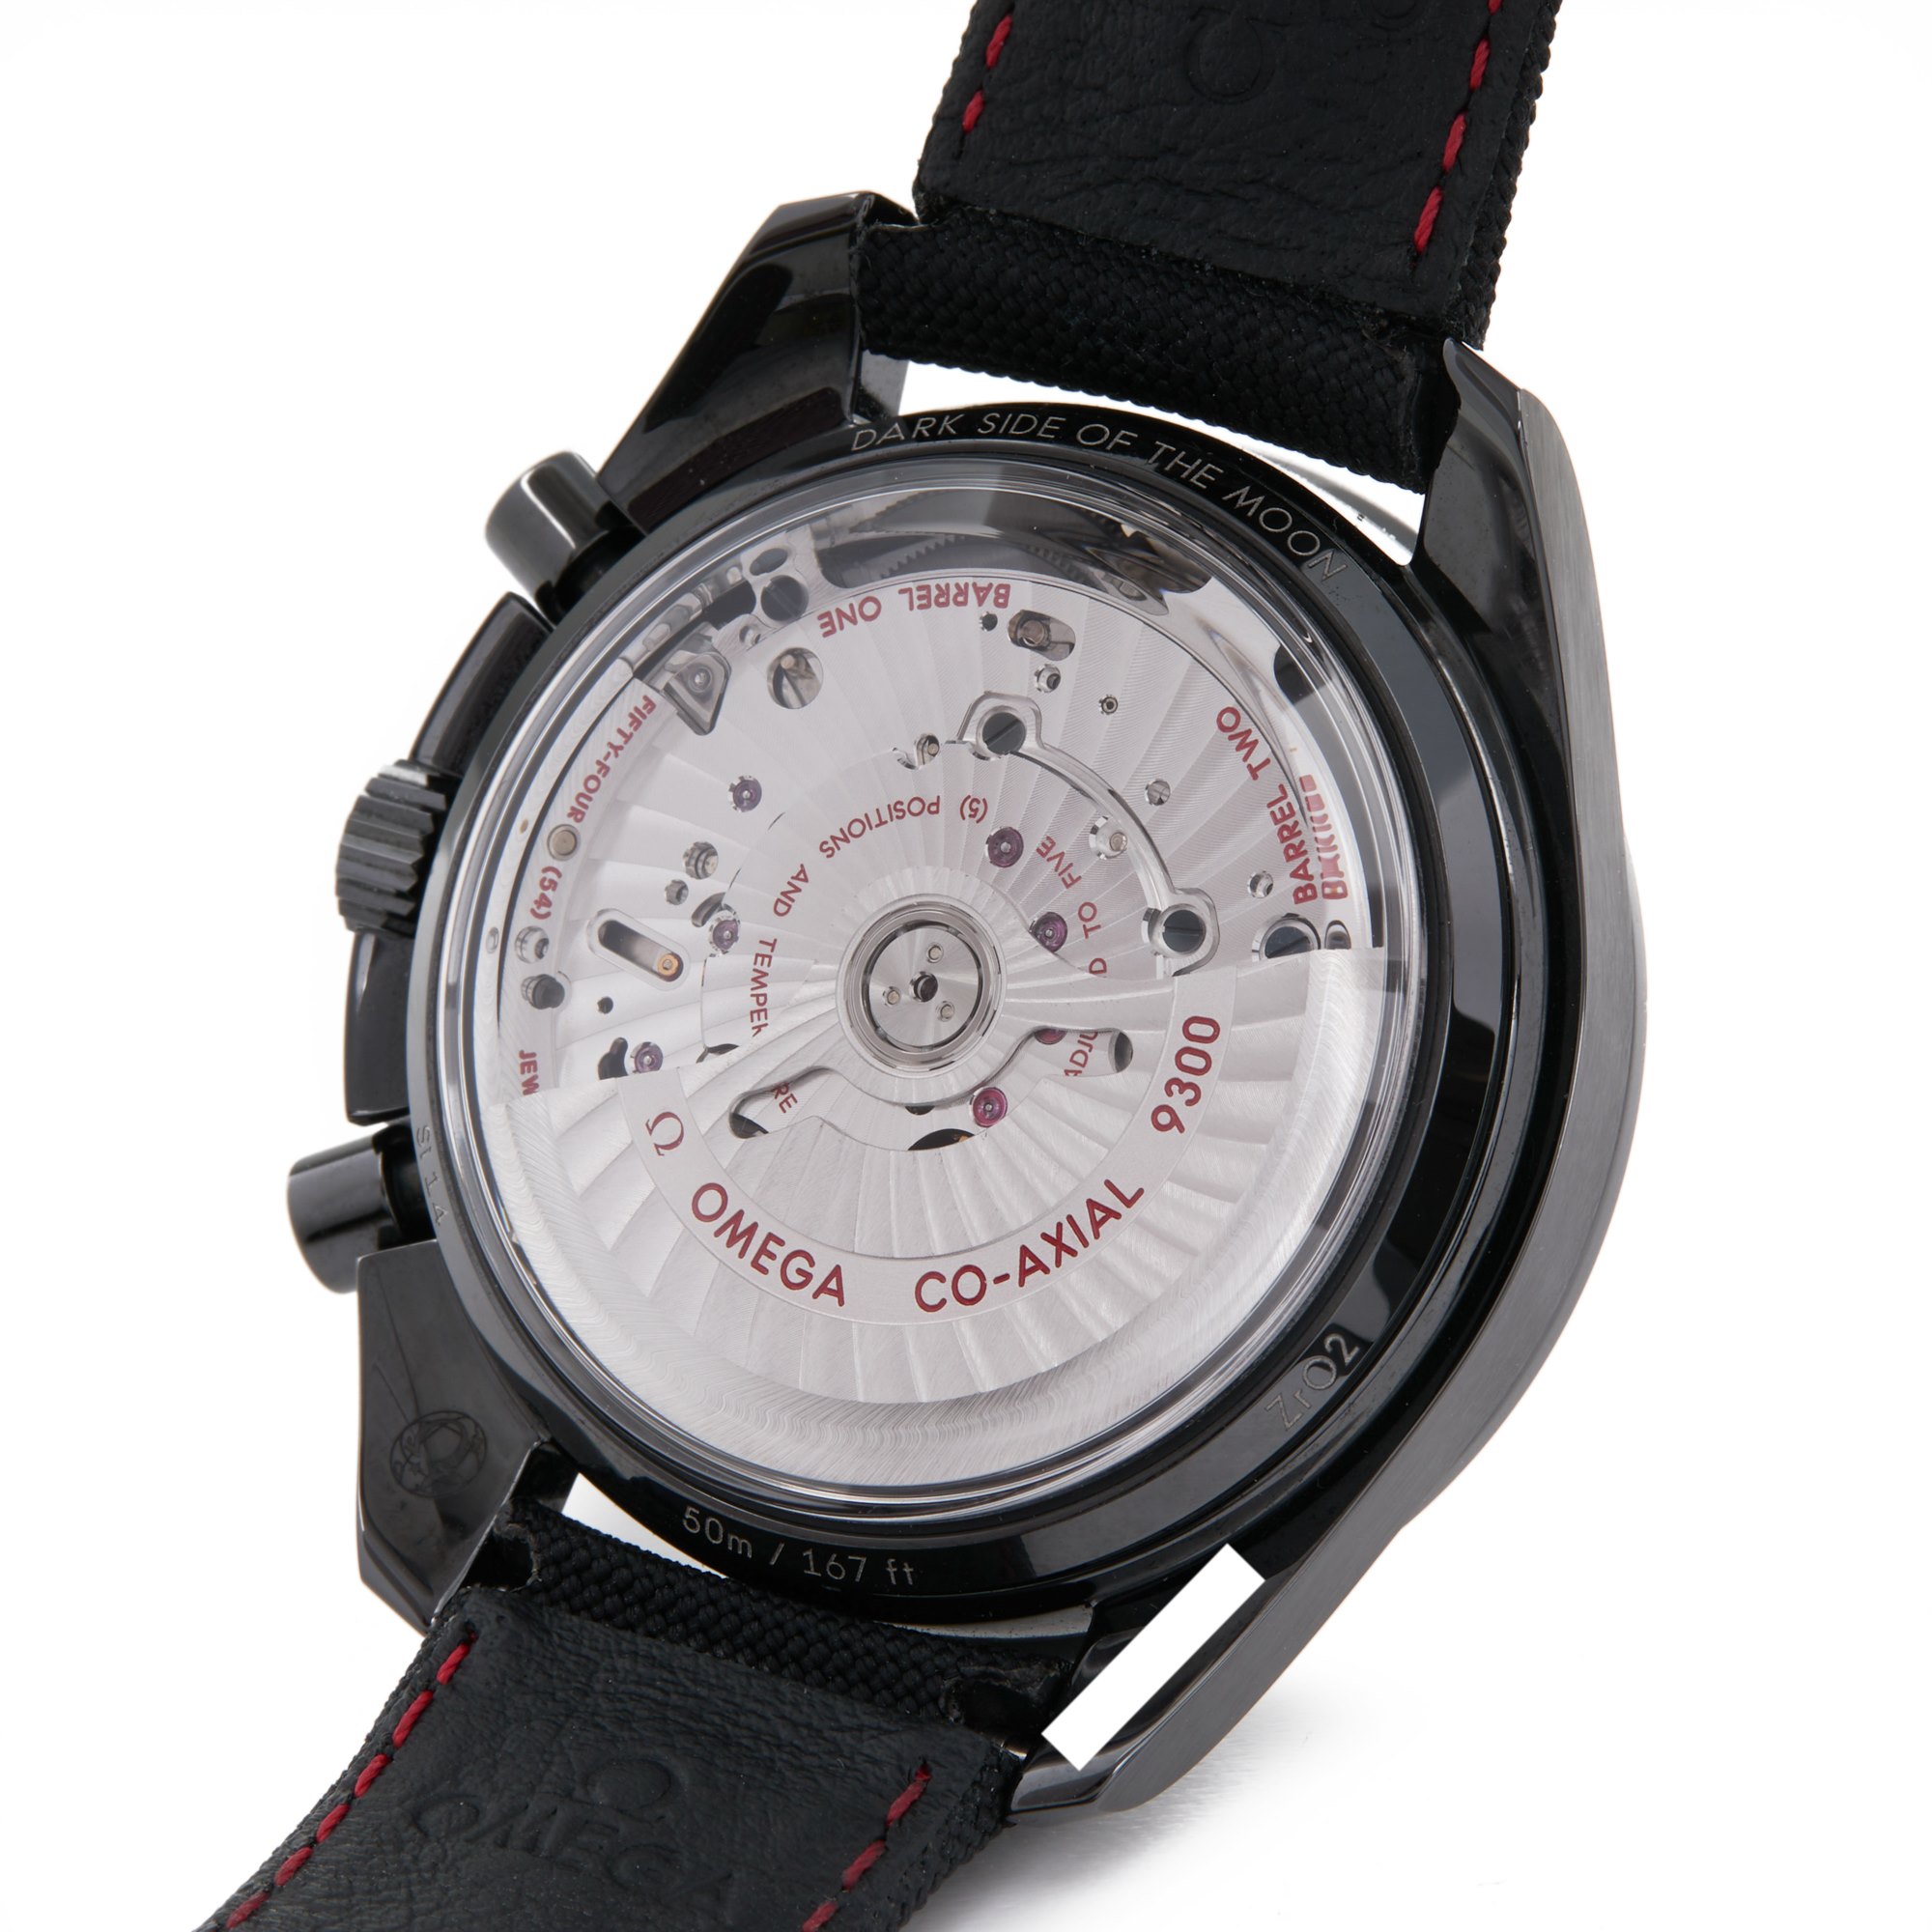 Omega Speedmaster Professional Moonwatch Ceramic 311.92.44.51.01.003